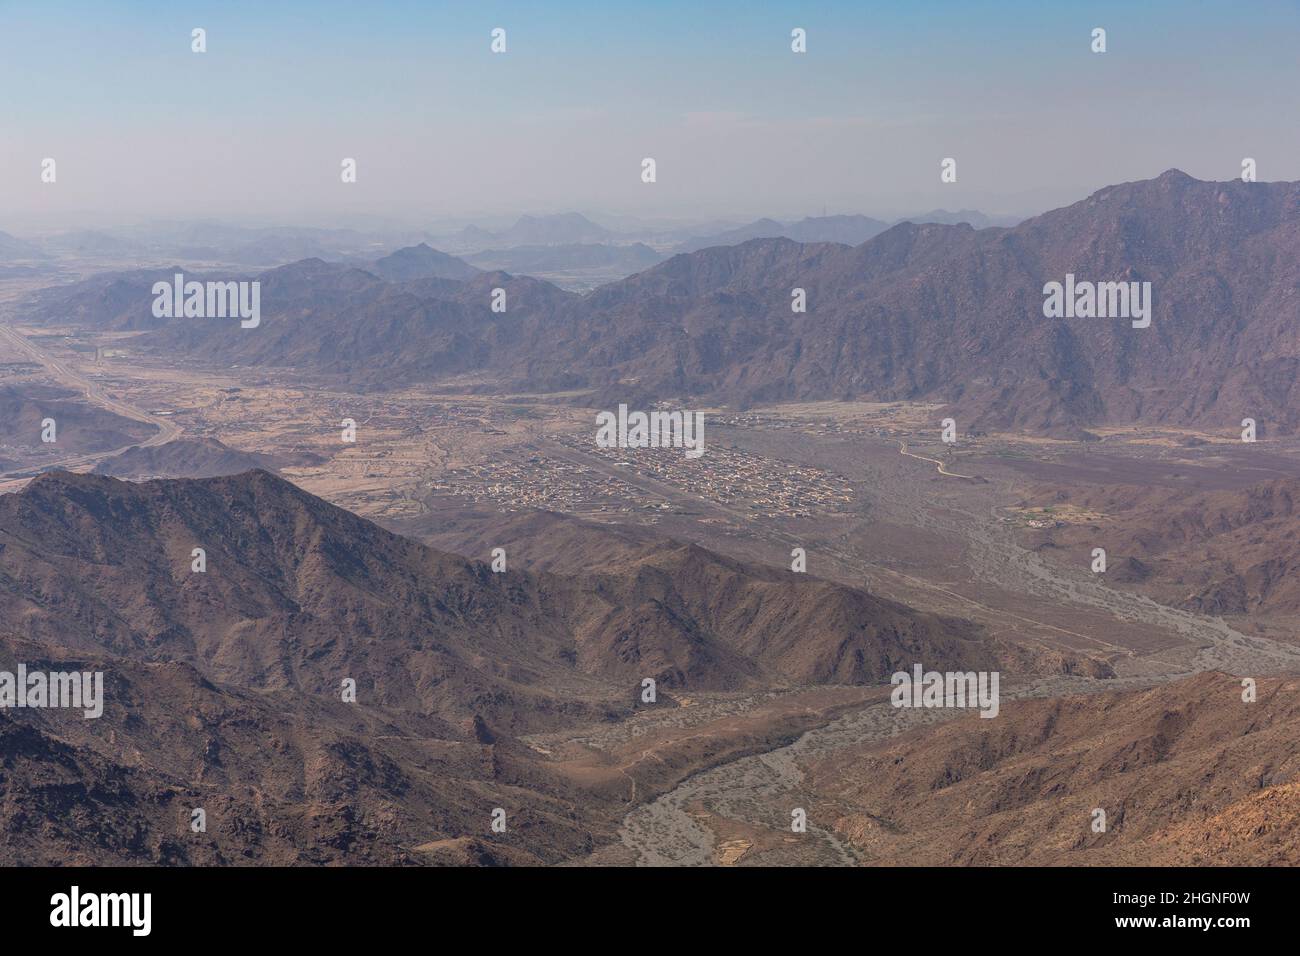 birdseye view of city of Taif Stock Photo